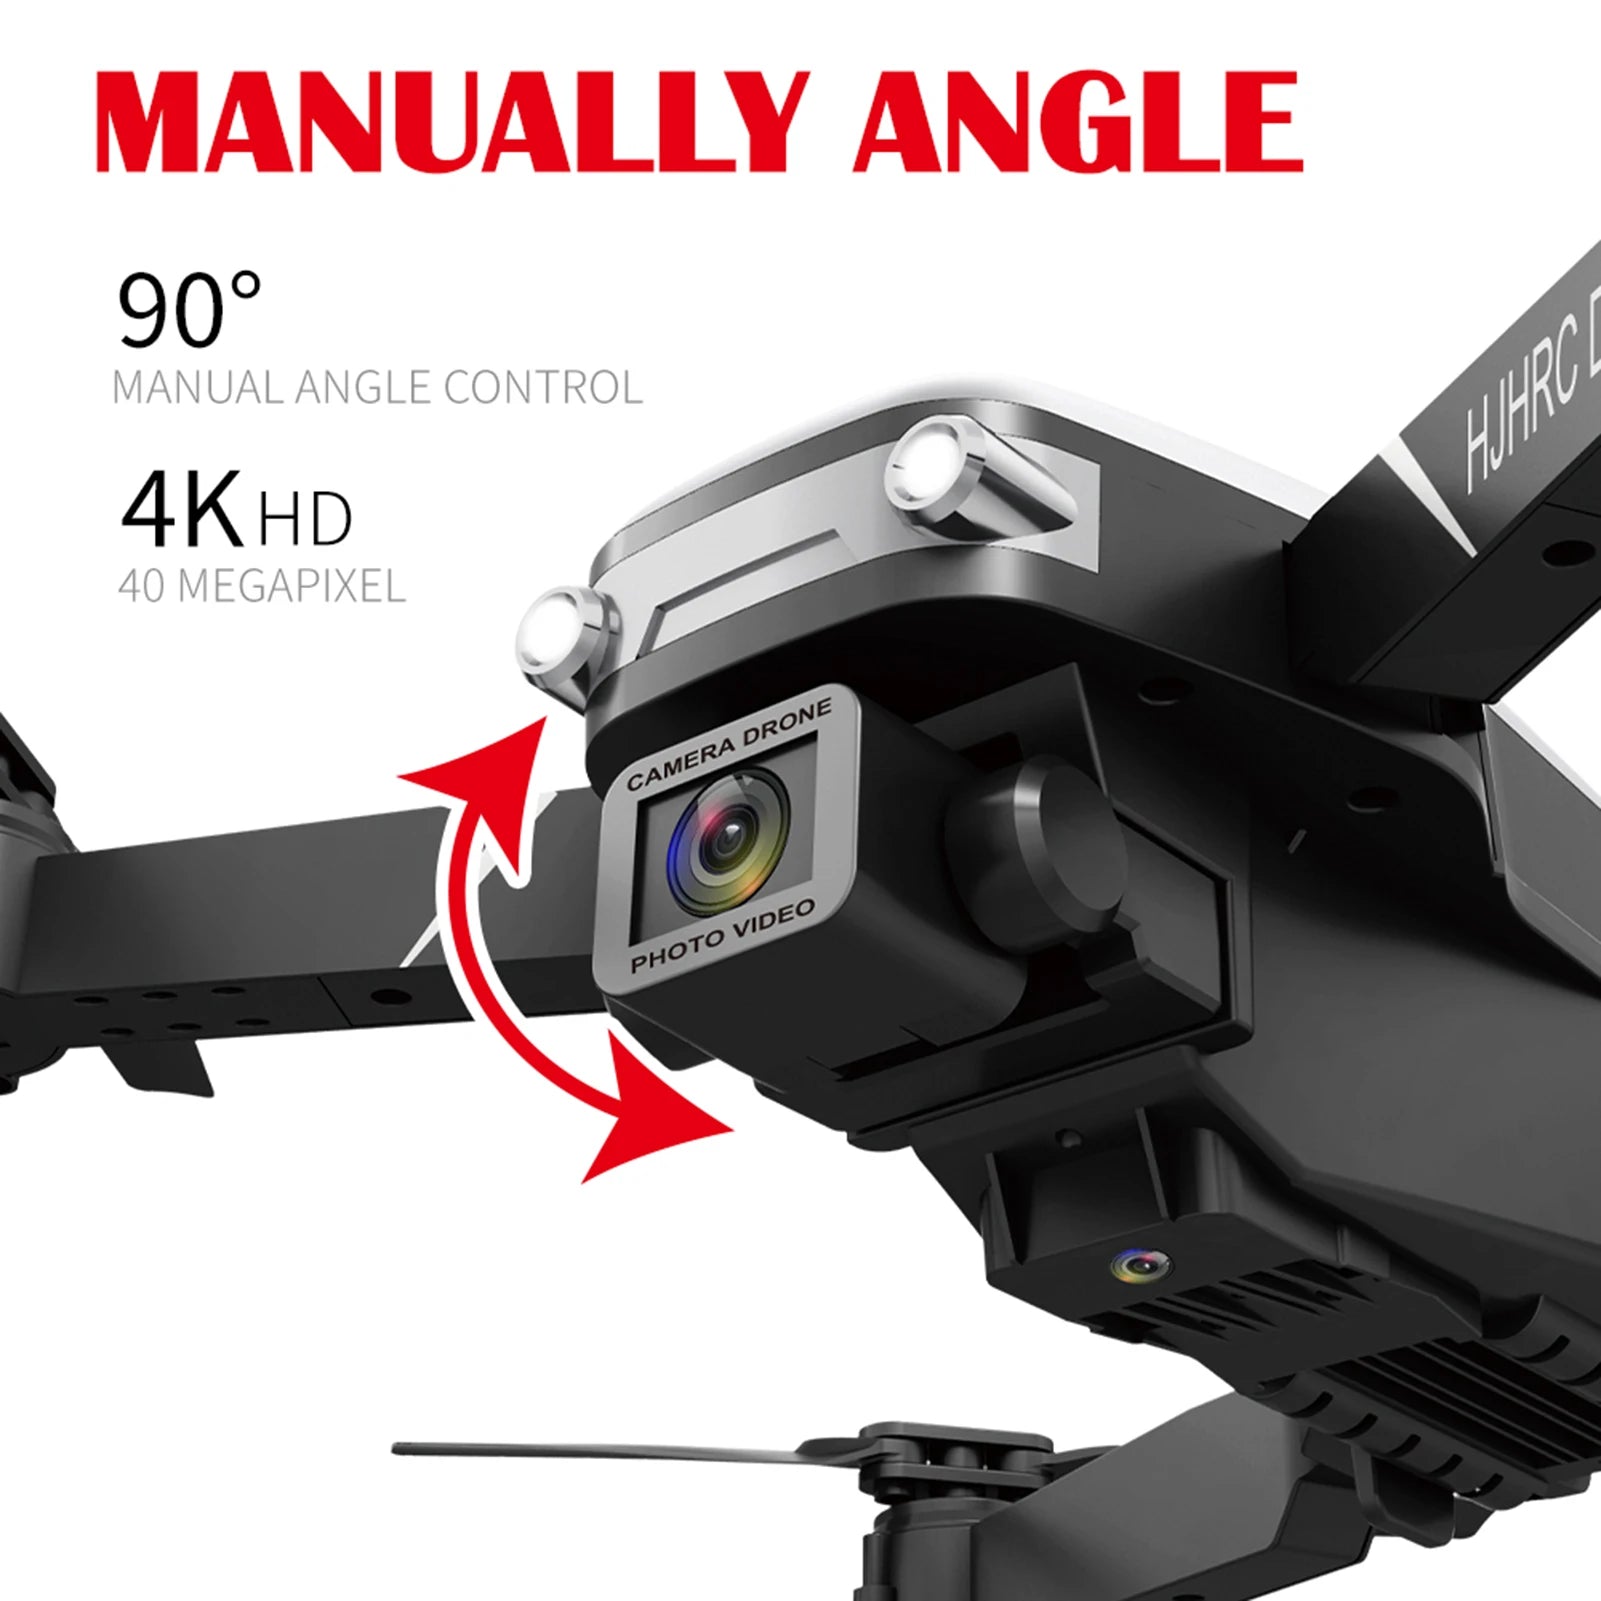 HJ95 Drone, manual angle 909 manual angle control 4khd 40 megapixel